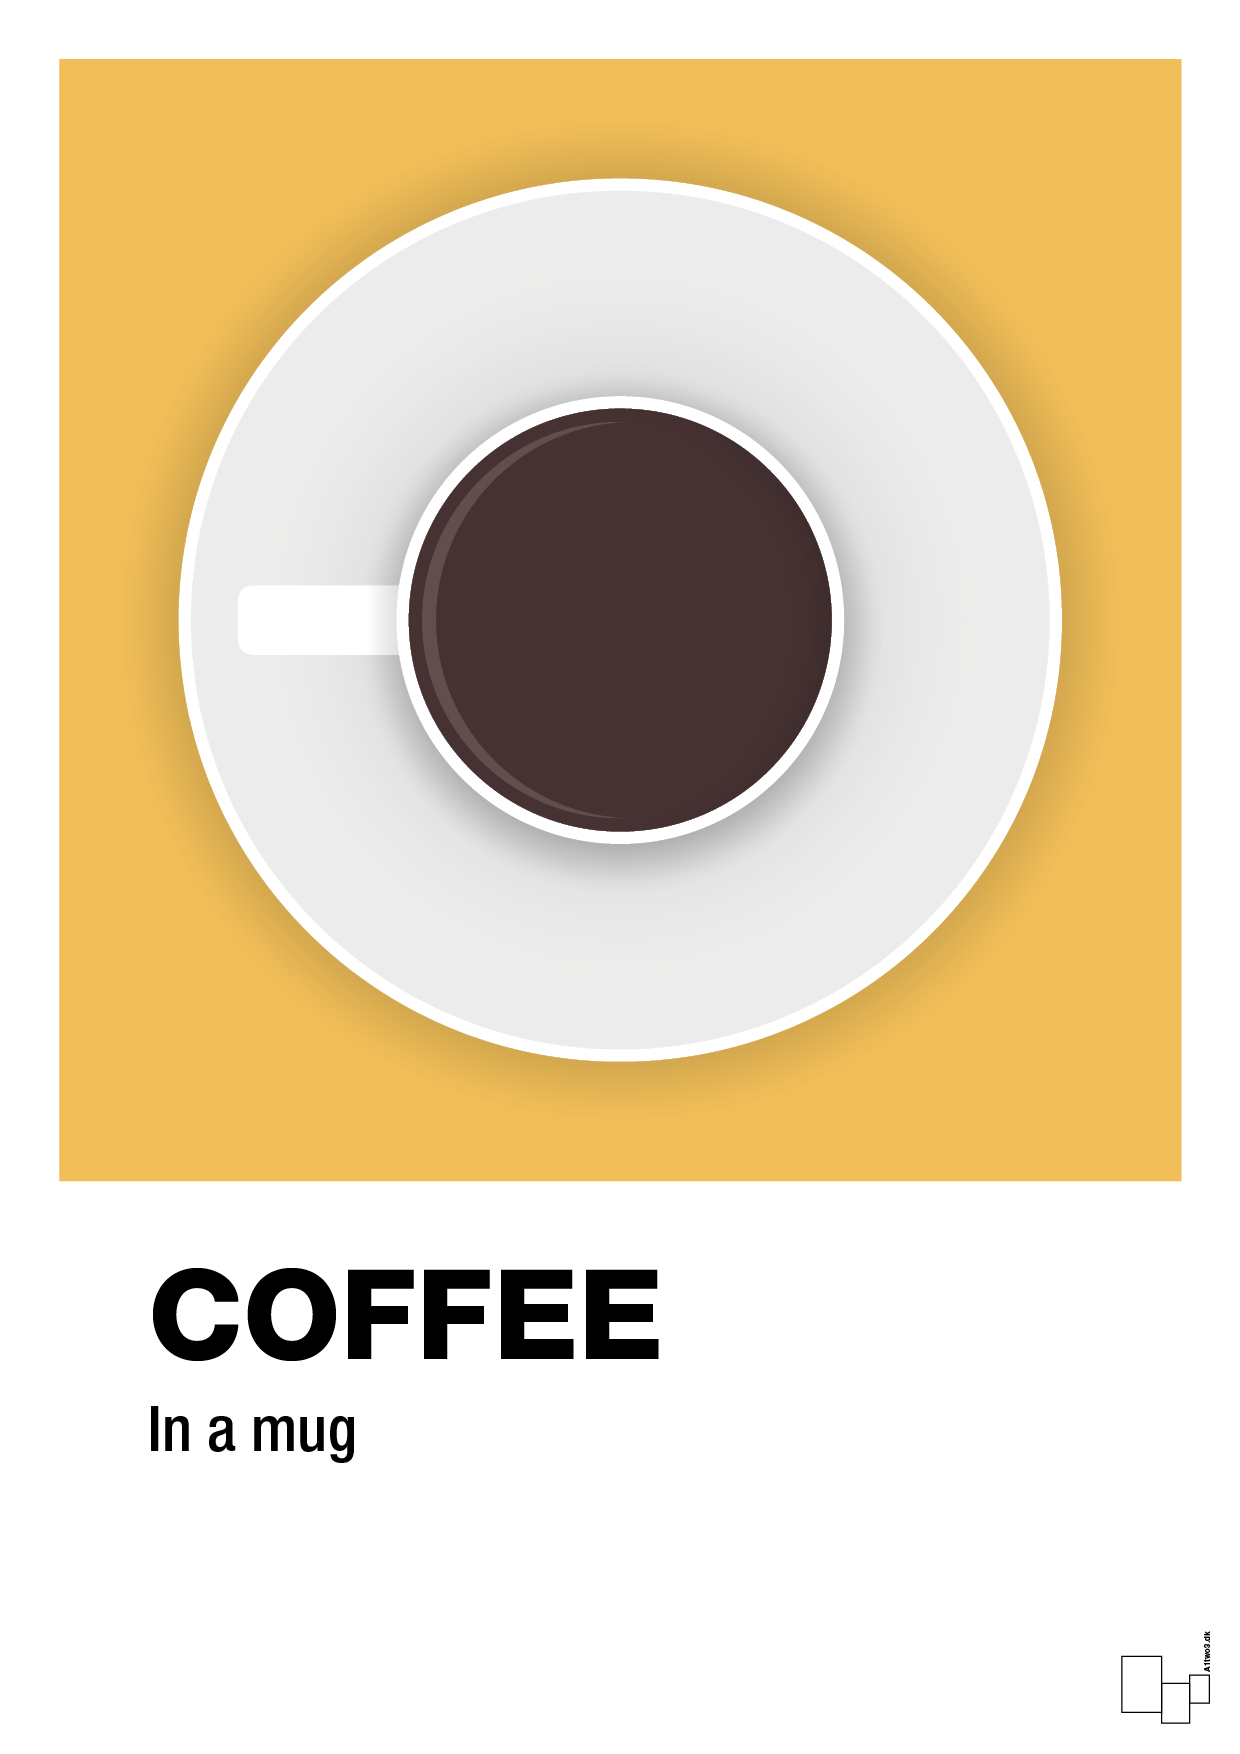 coffee in a mug - Plakat med Mad & Drikke i Honeycomb